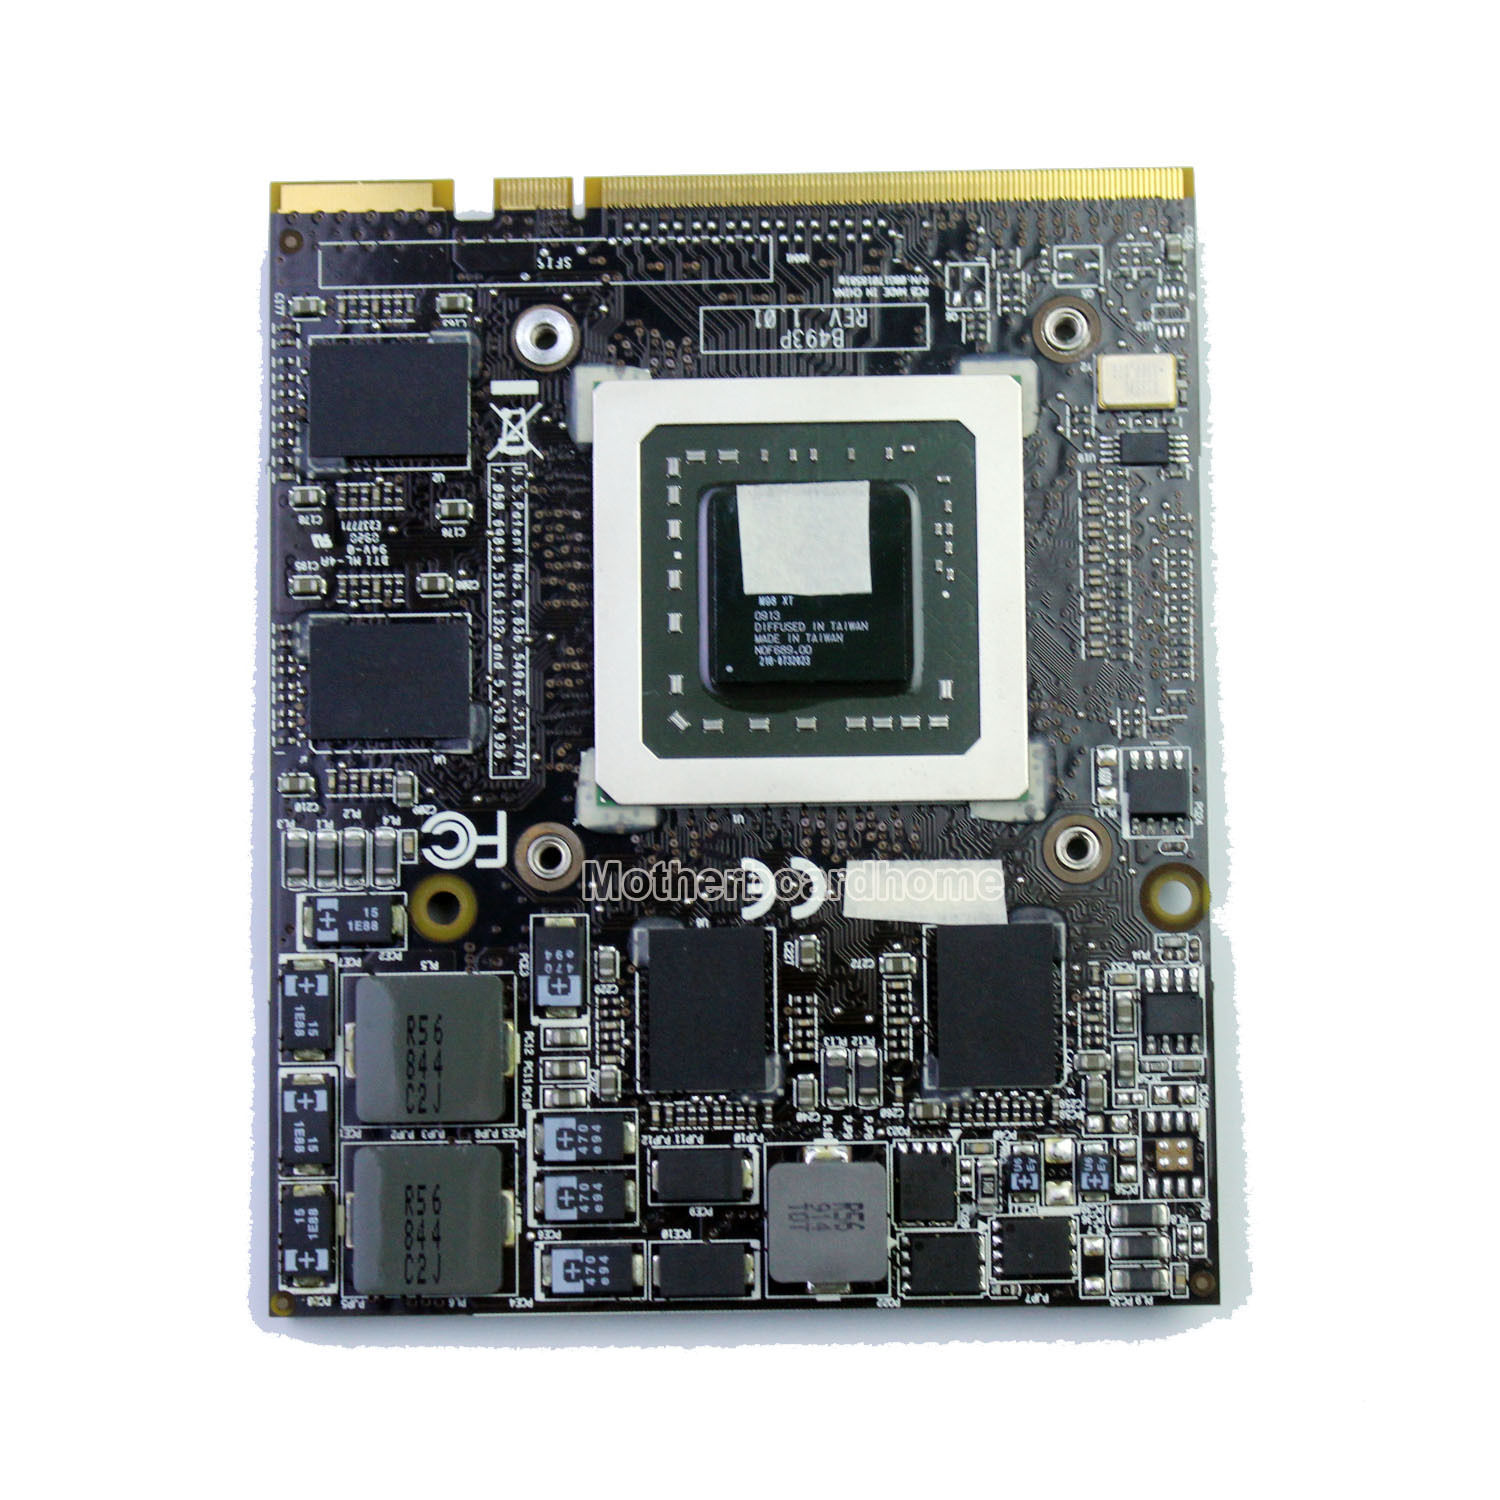 ASUS ATI Mobility Radeon 512M MA4870 Graphics Card Board 216-073 - Click Image to Close